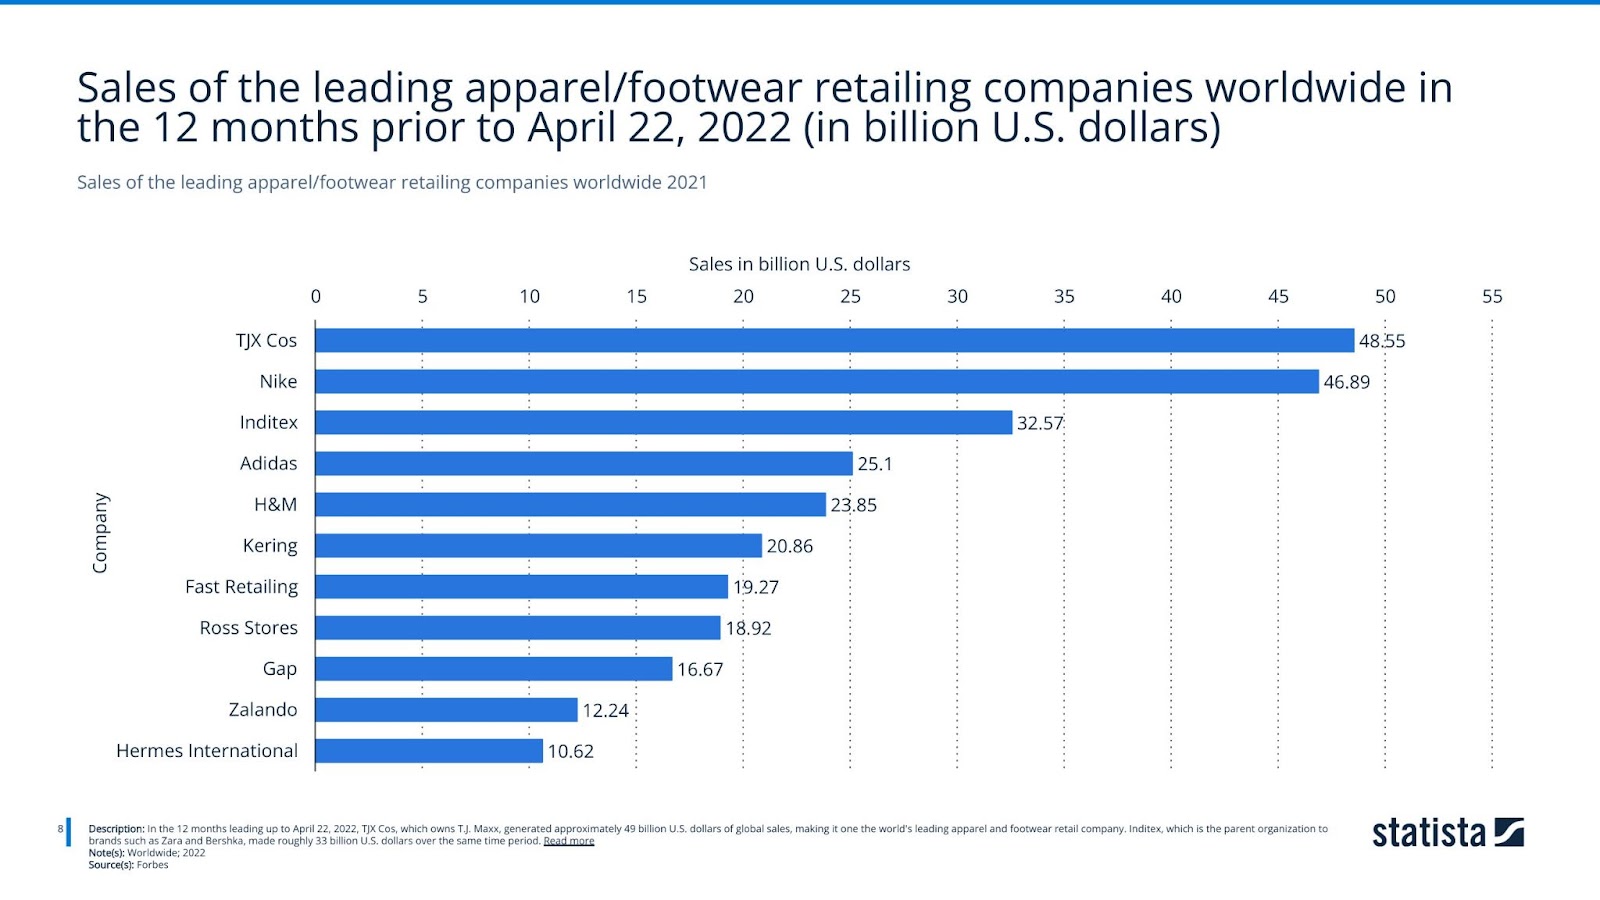 Sales of the leading apparel/footwear retailing companies worldwide 2021